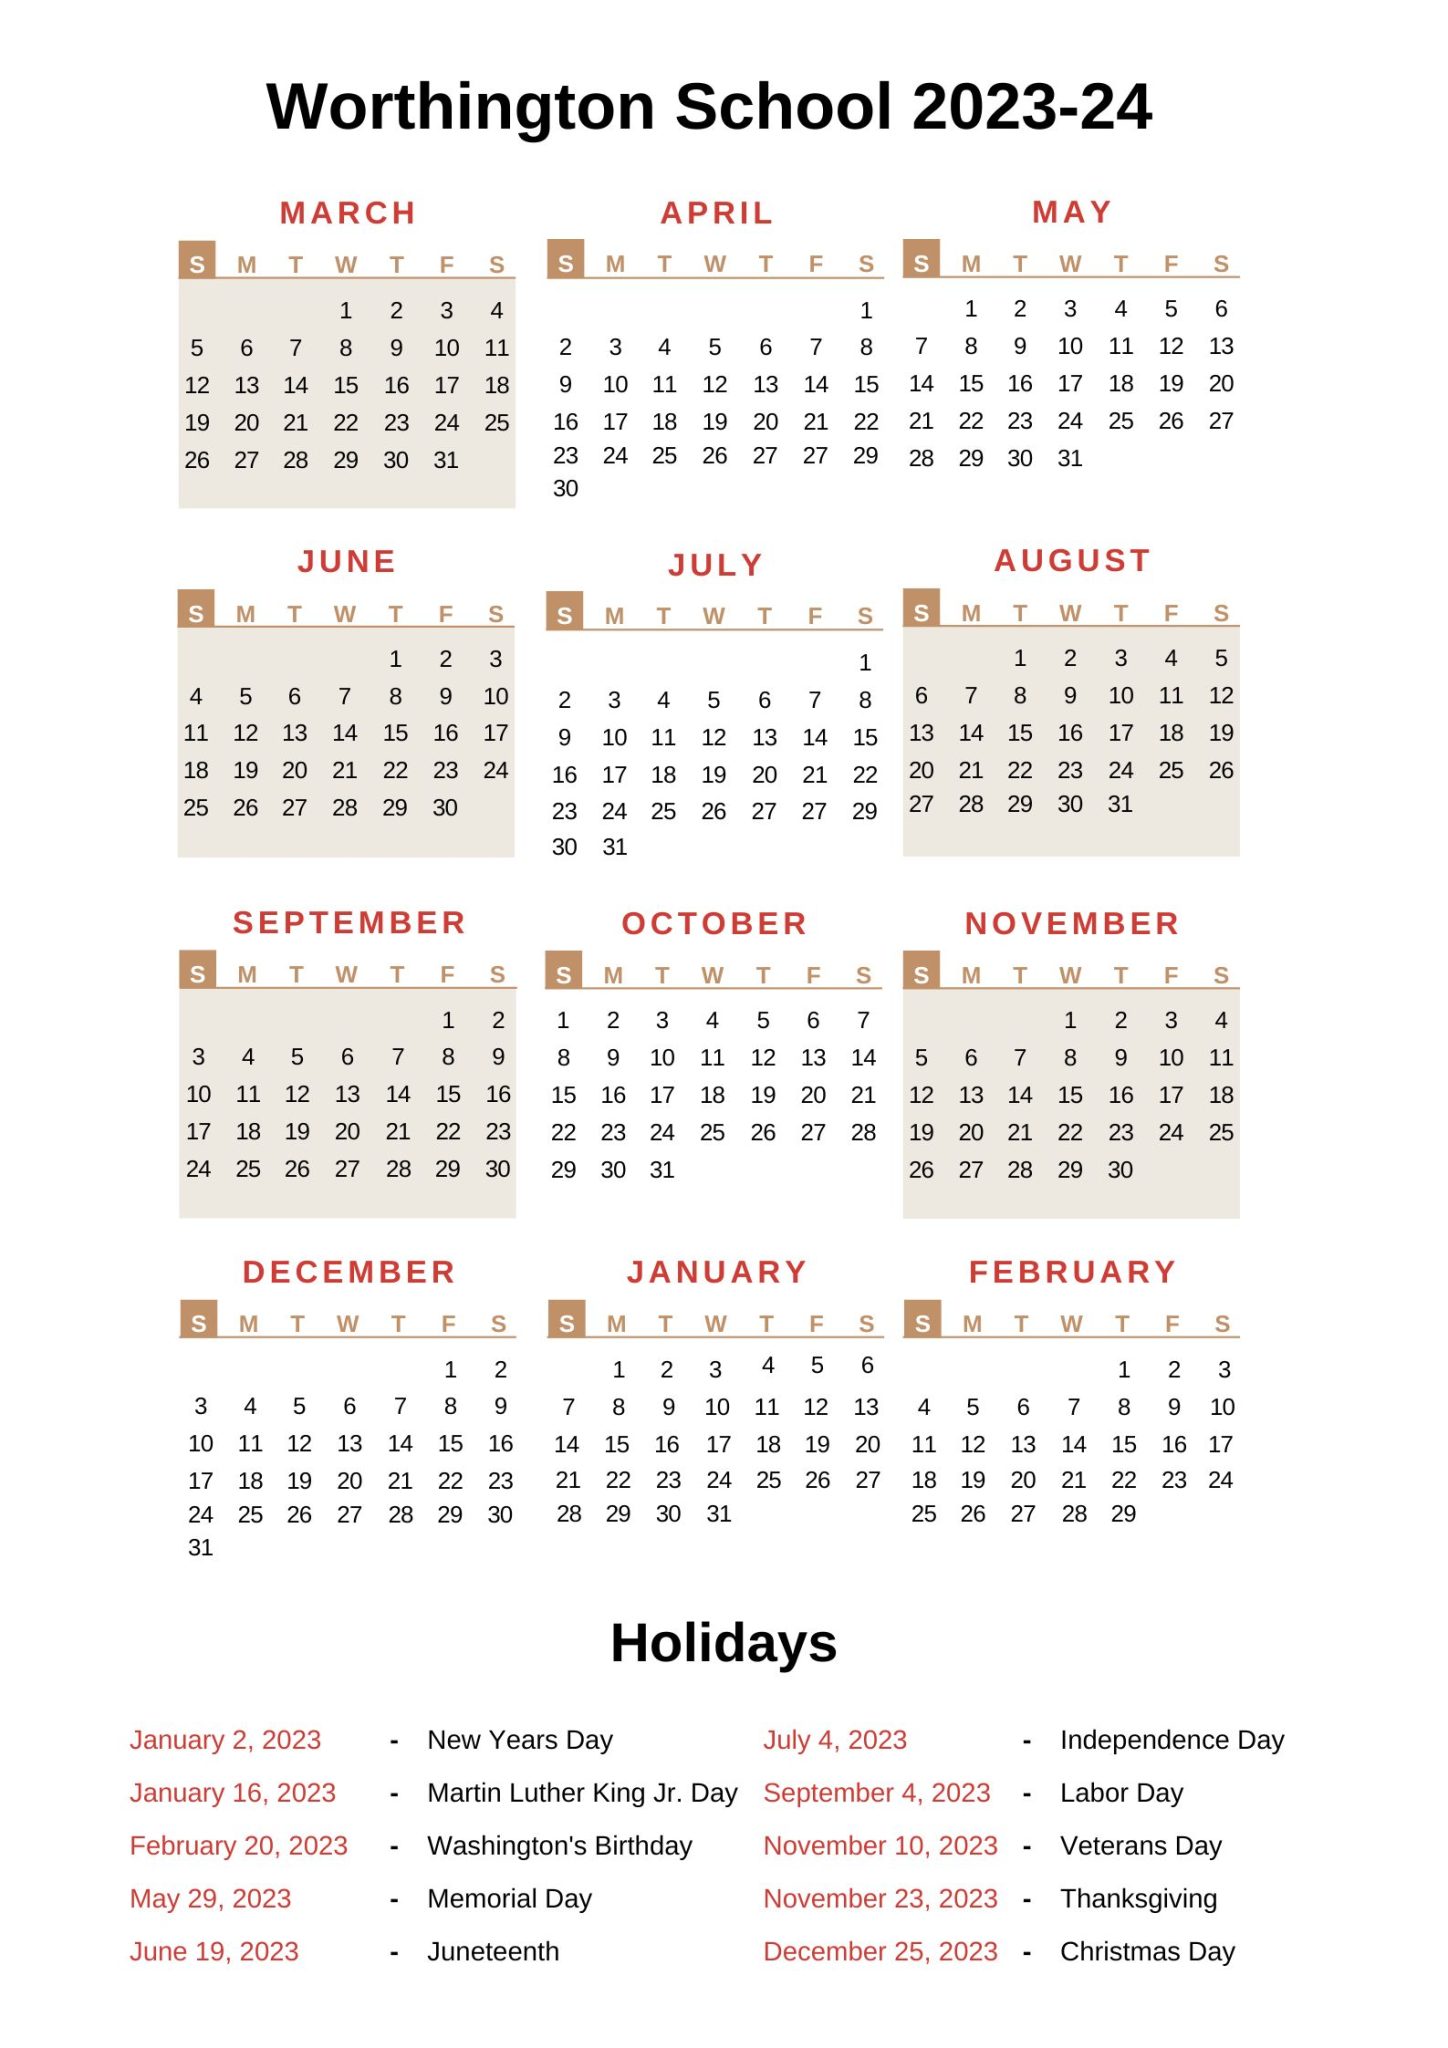 Worthington Schools Calendar 202324 With Holidays